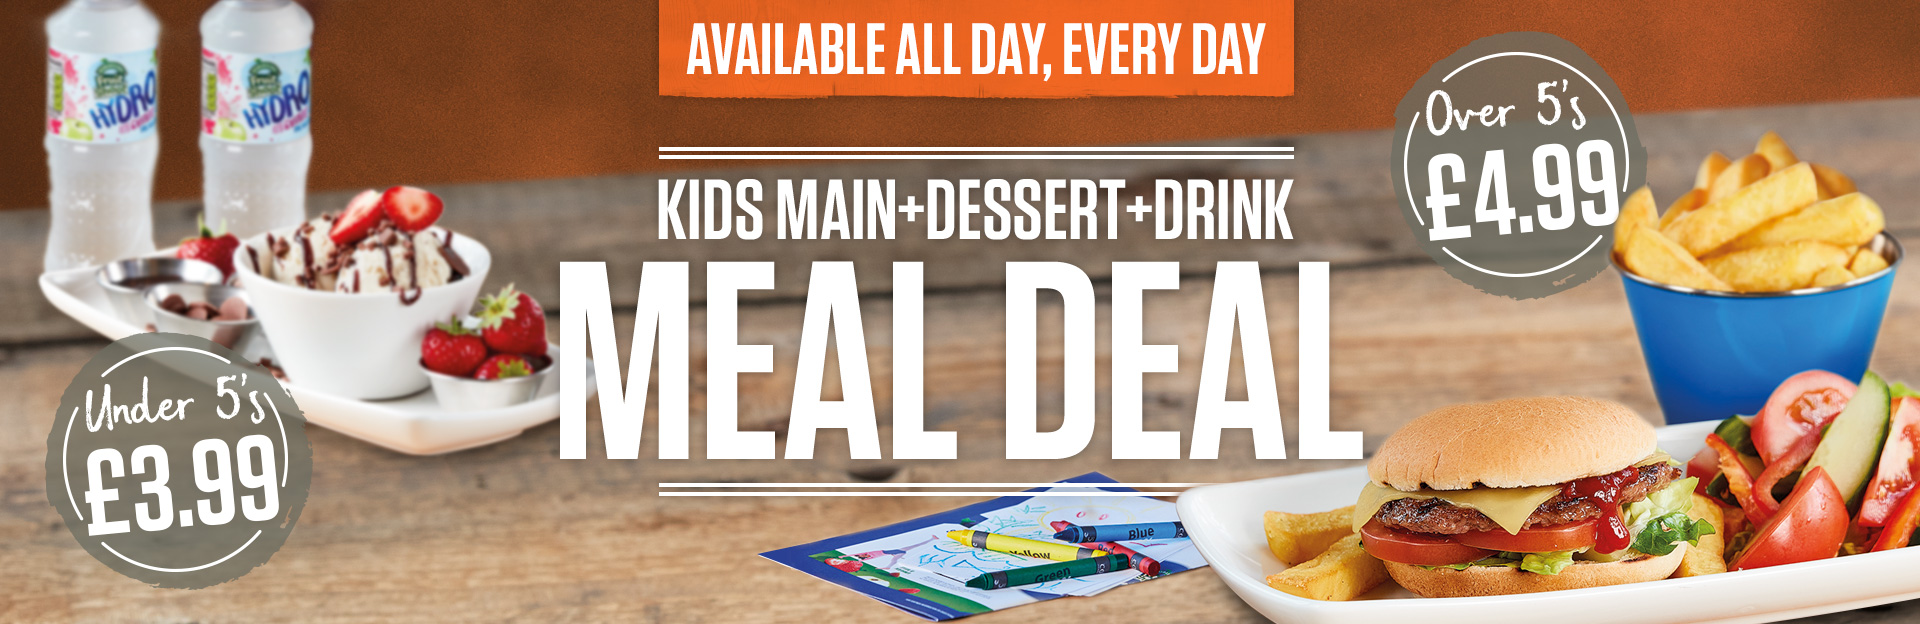 kids meal deal